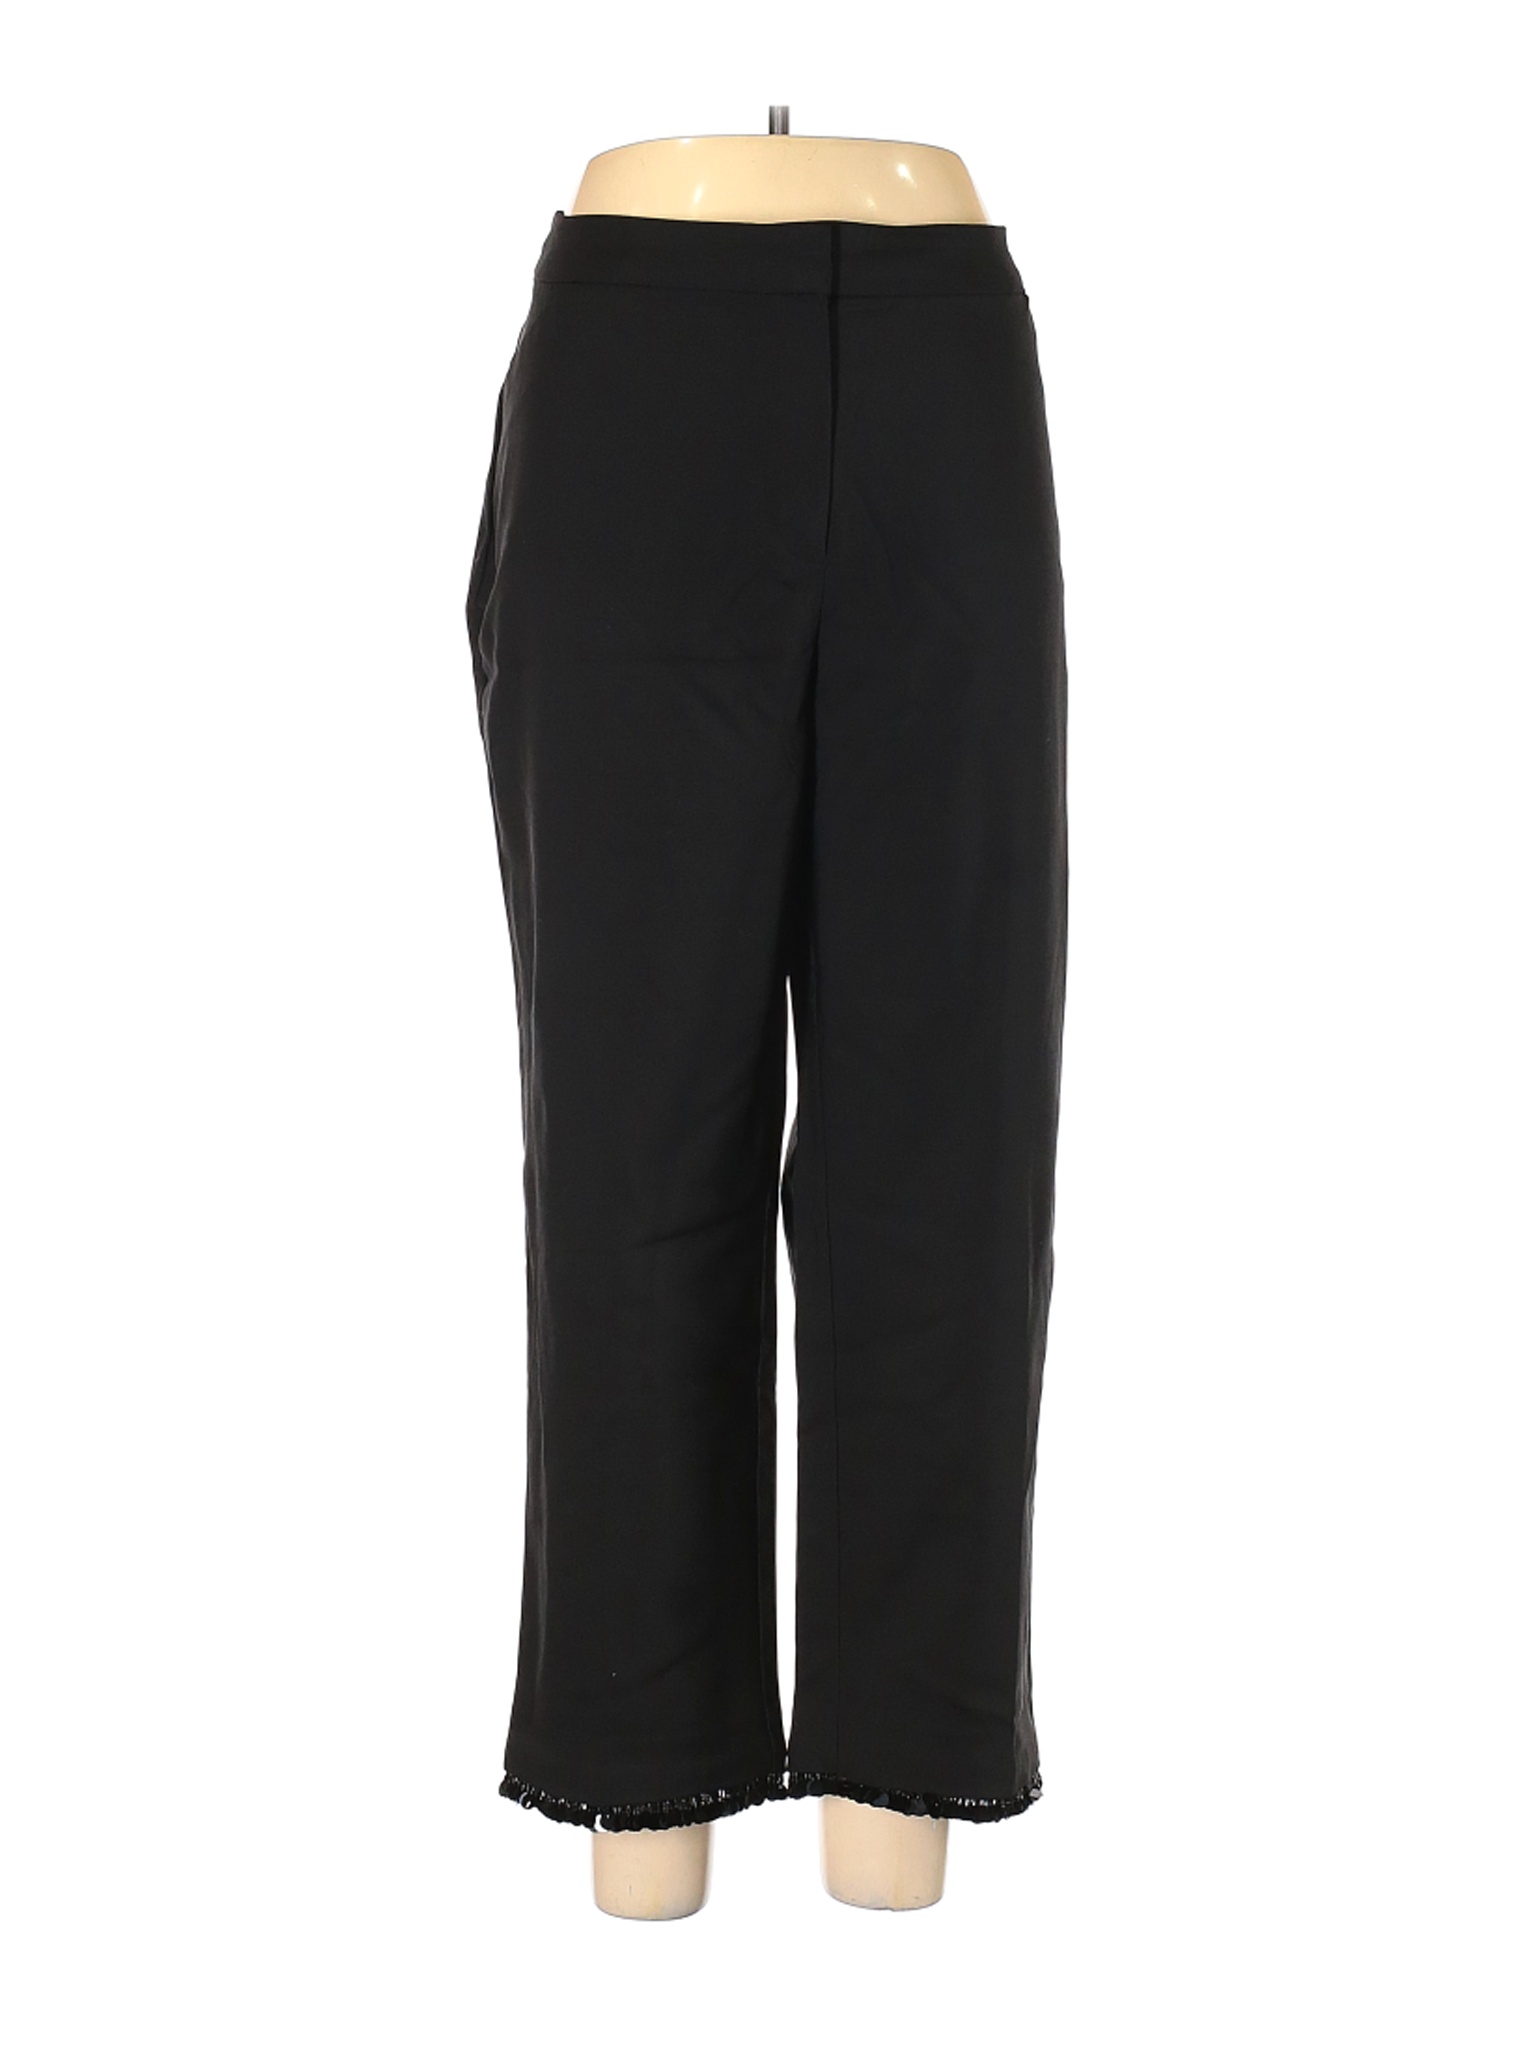 Chico's Women Black Dress Pants XL | eBay